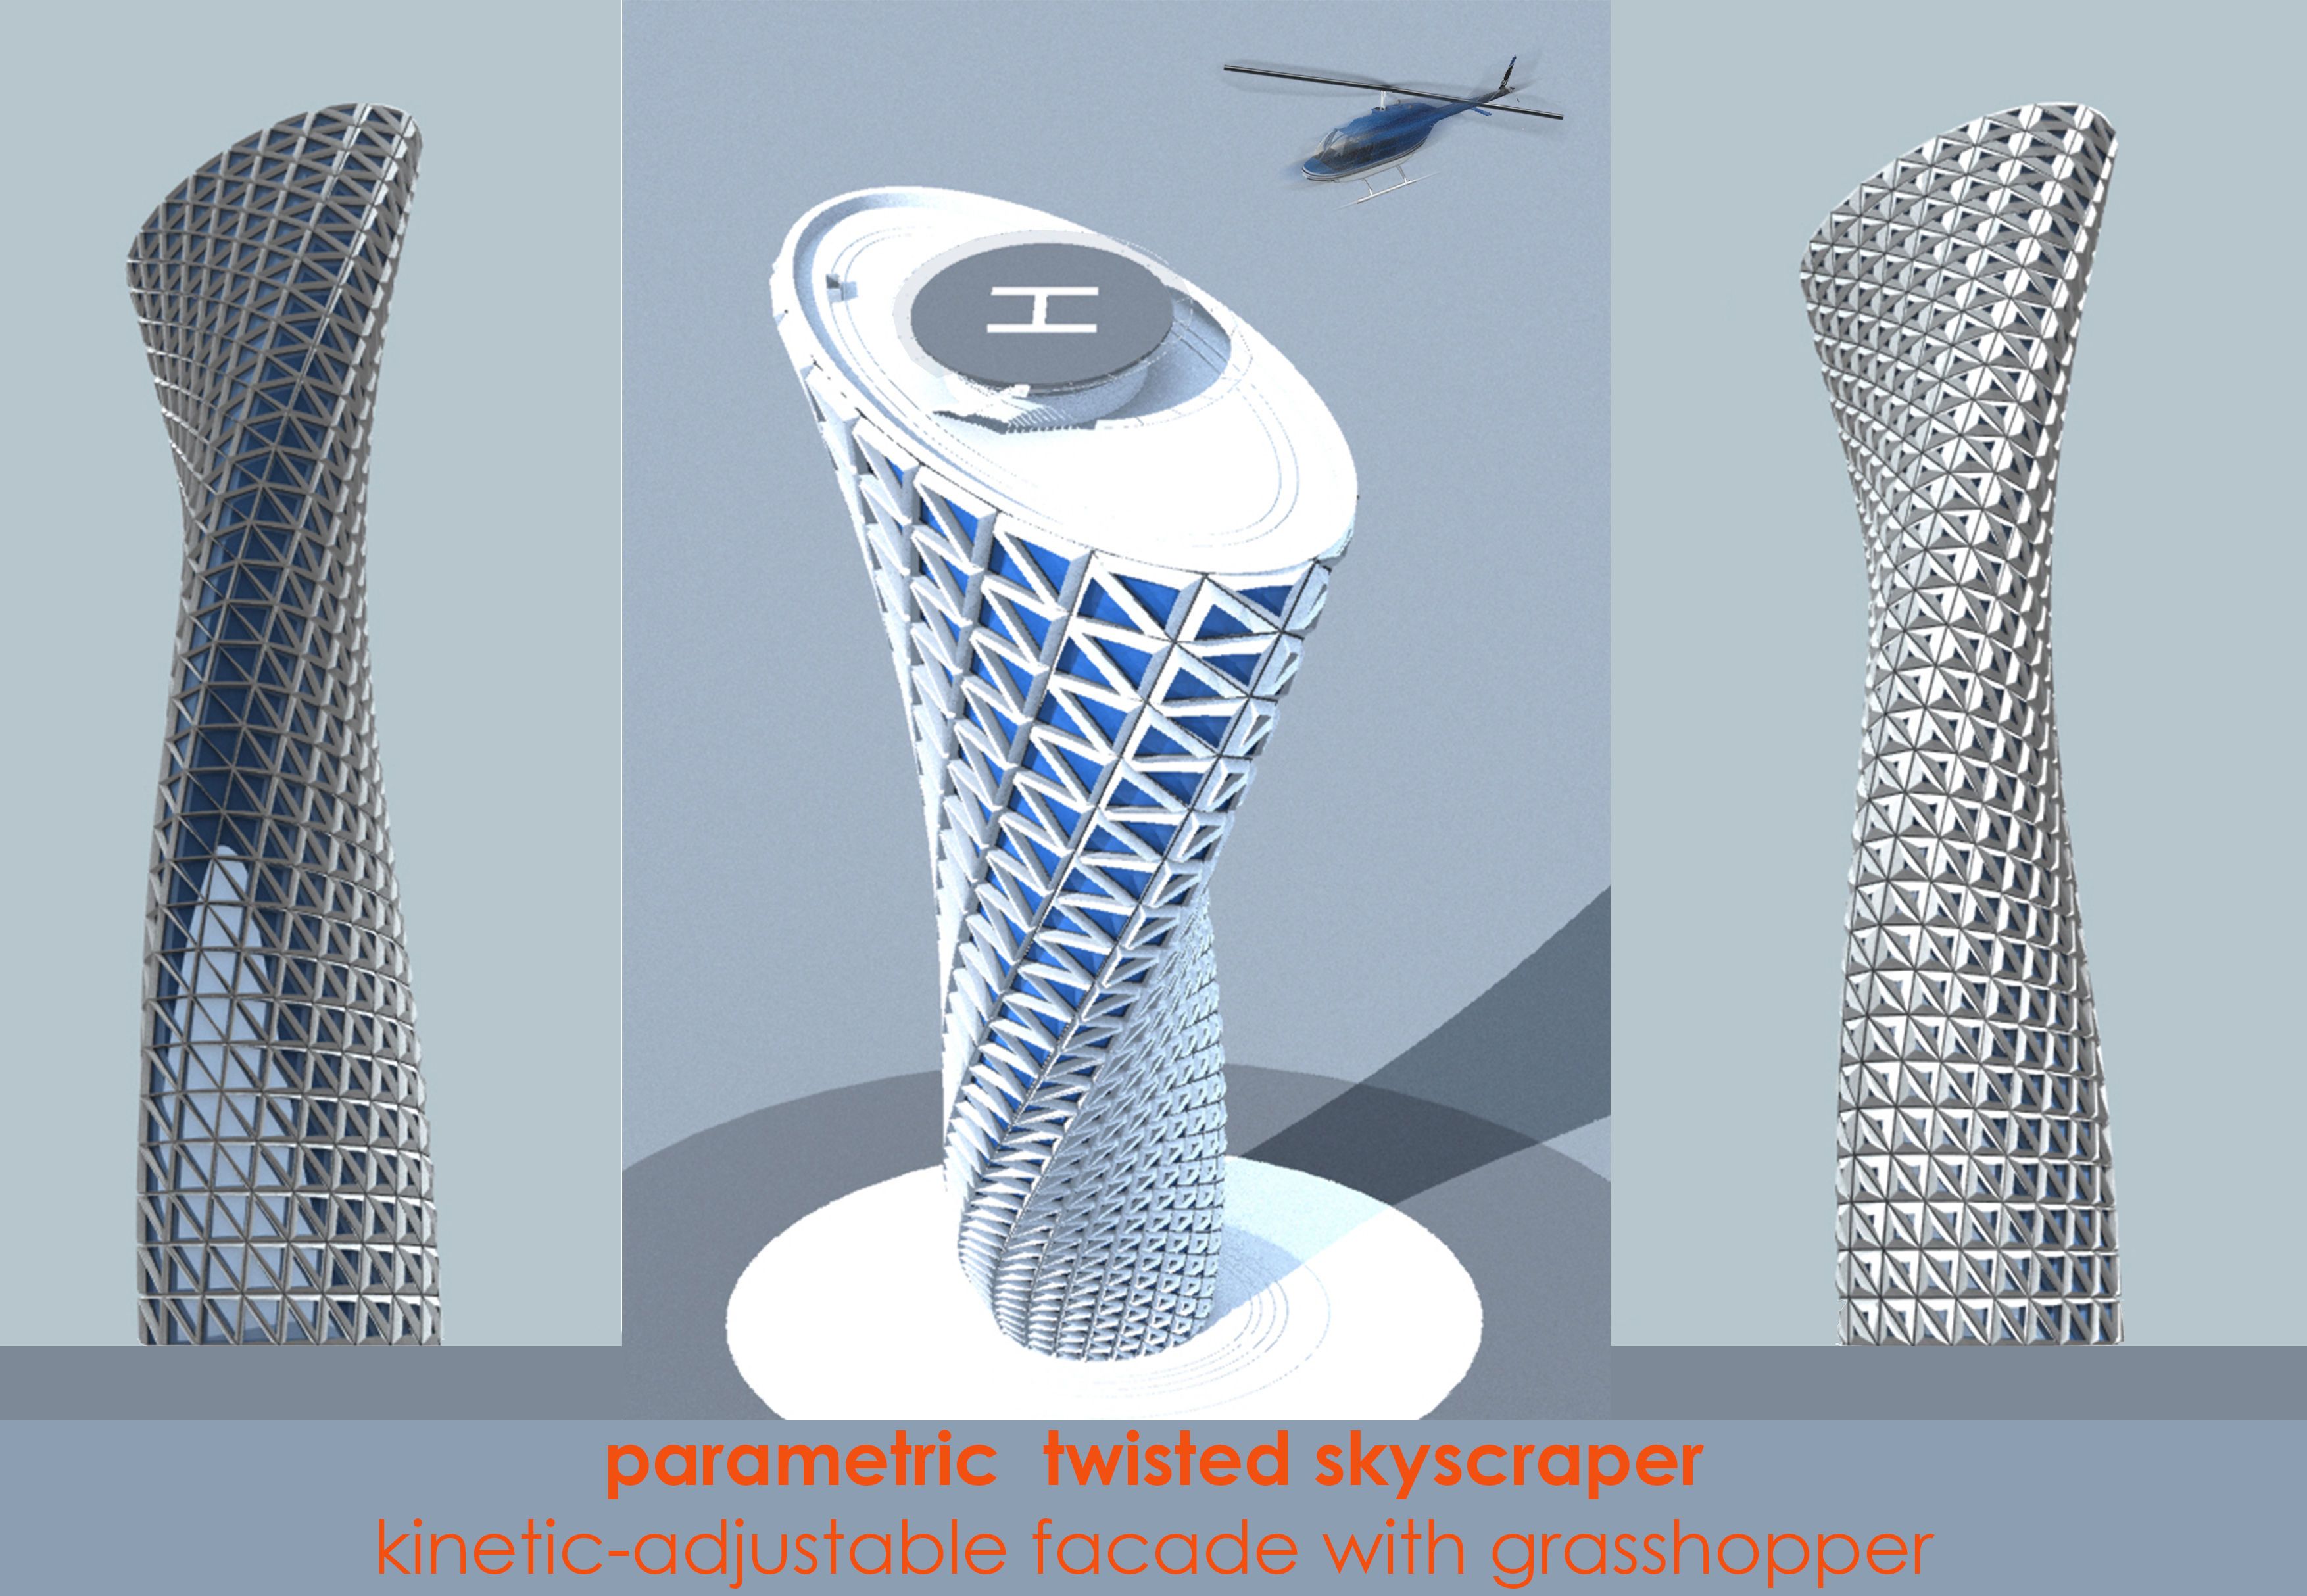 Parametric design of a twisted skyscraper